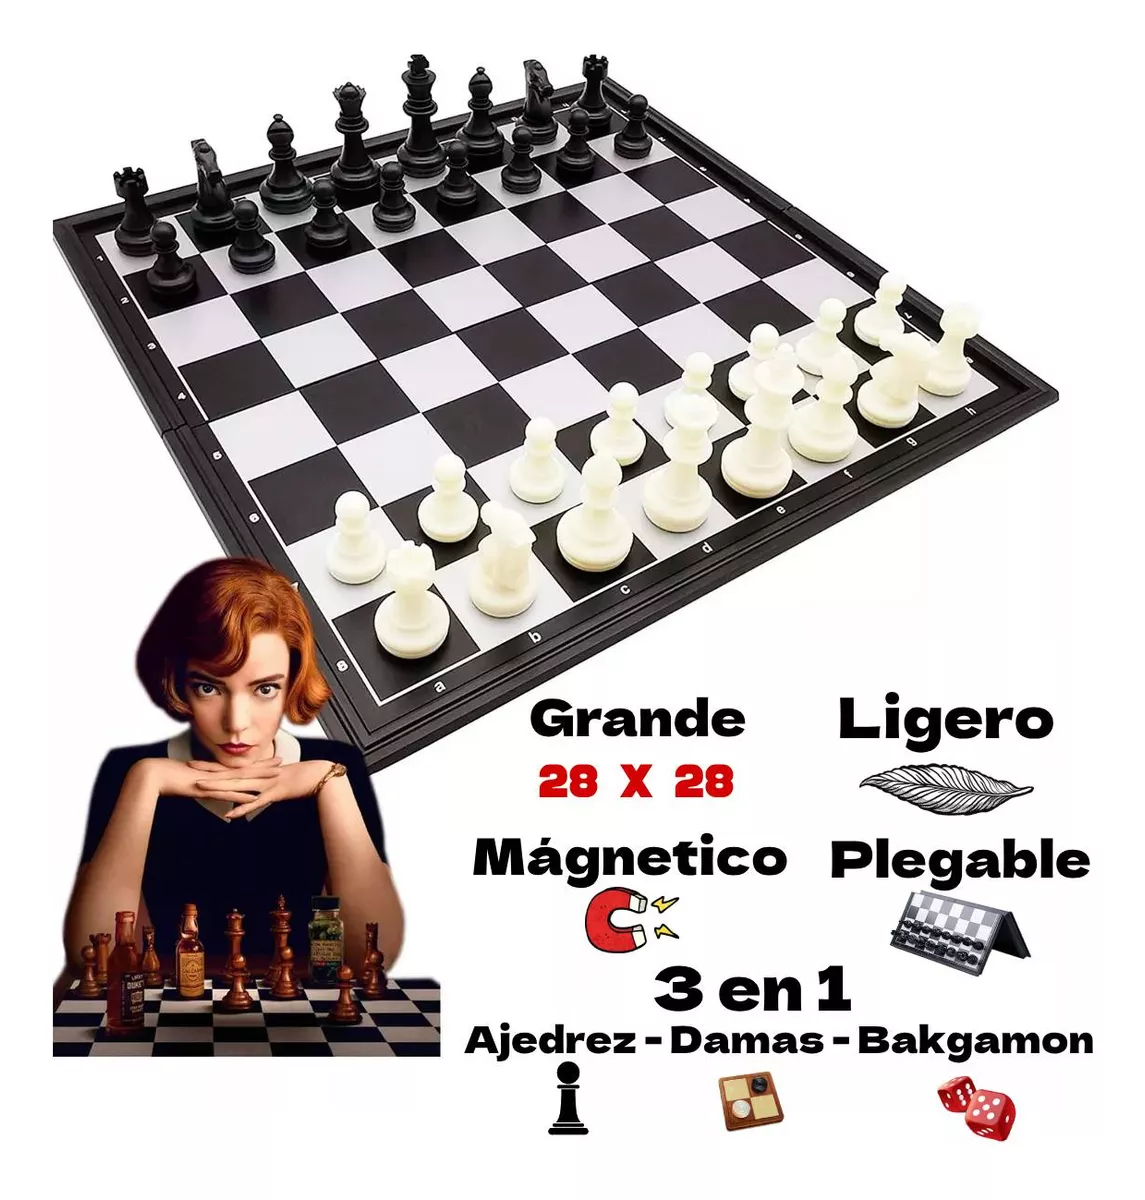 Tercera imagen para búsqueda de tablero ajedrez